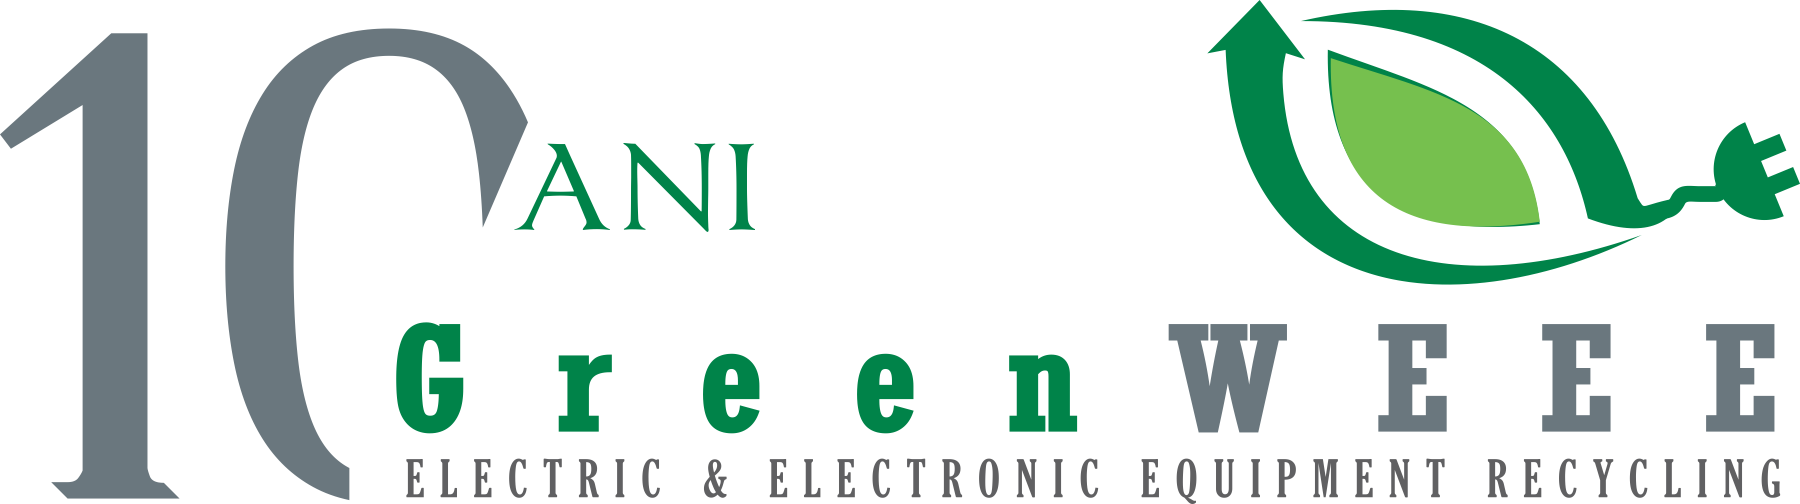 logo_greenweee_10ani.png